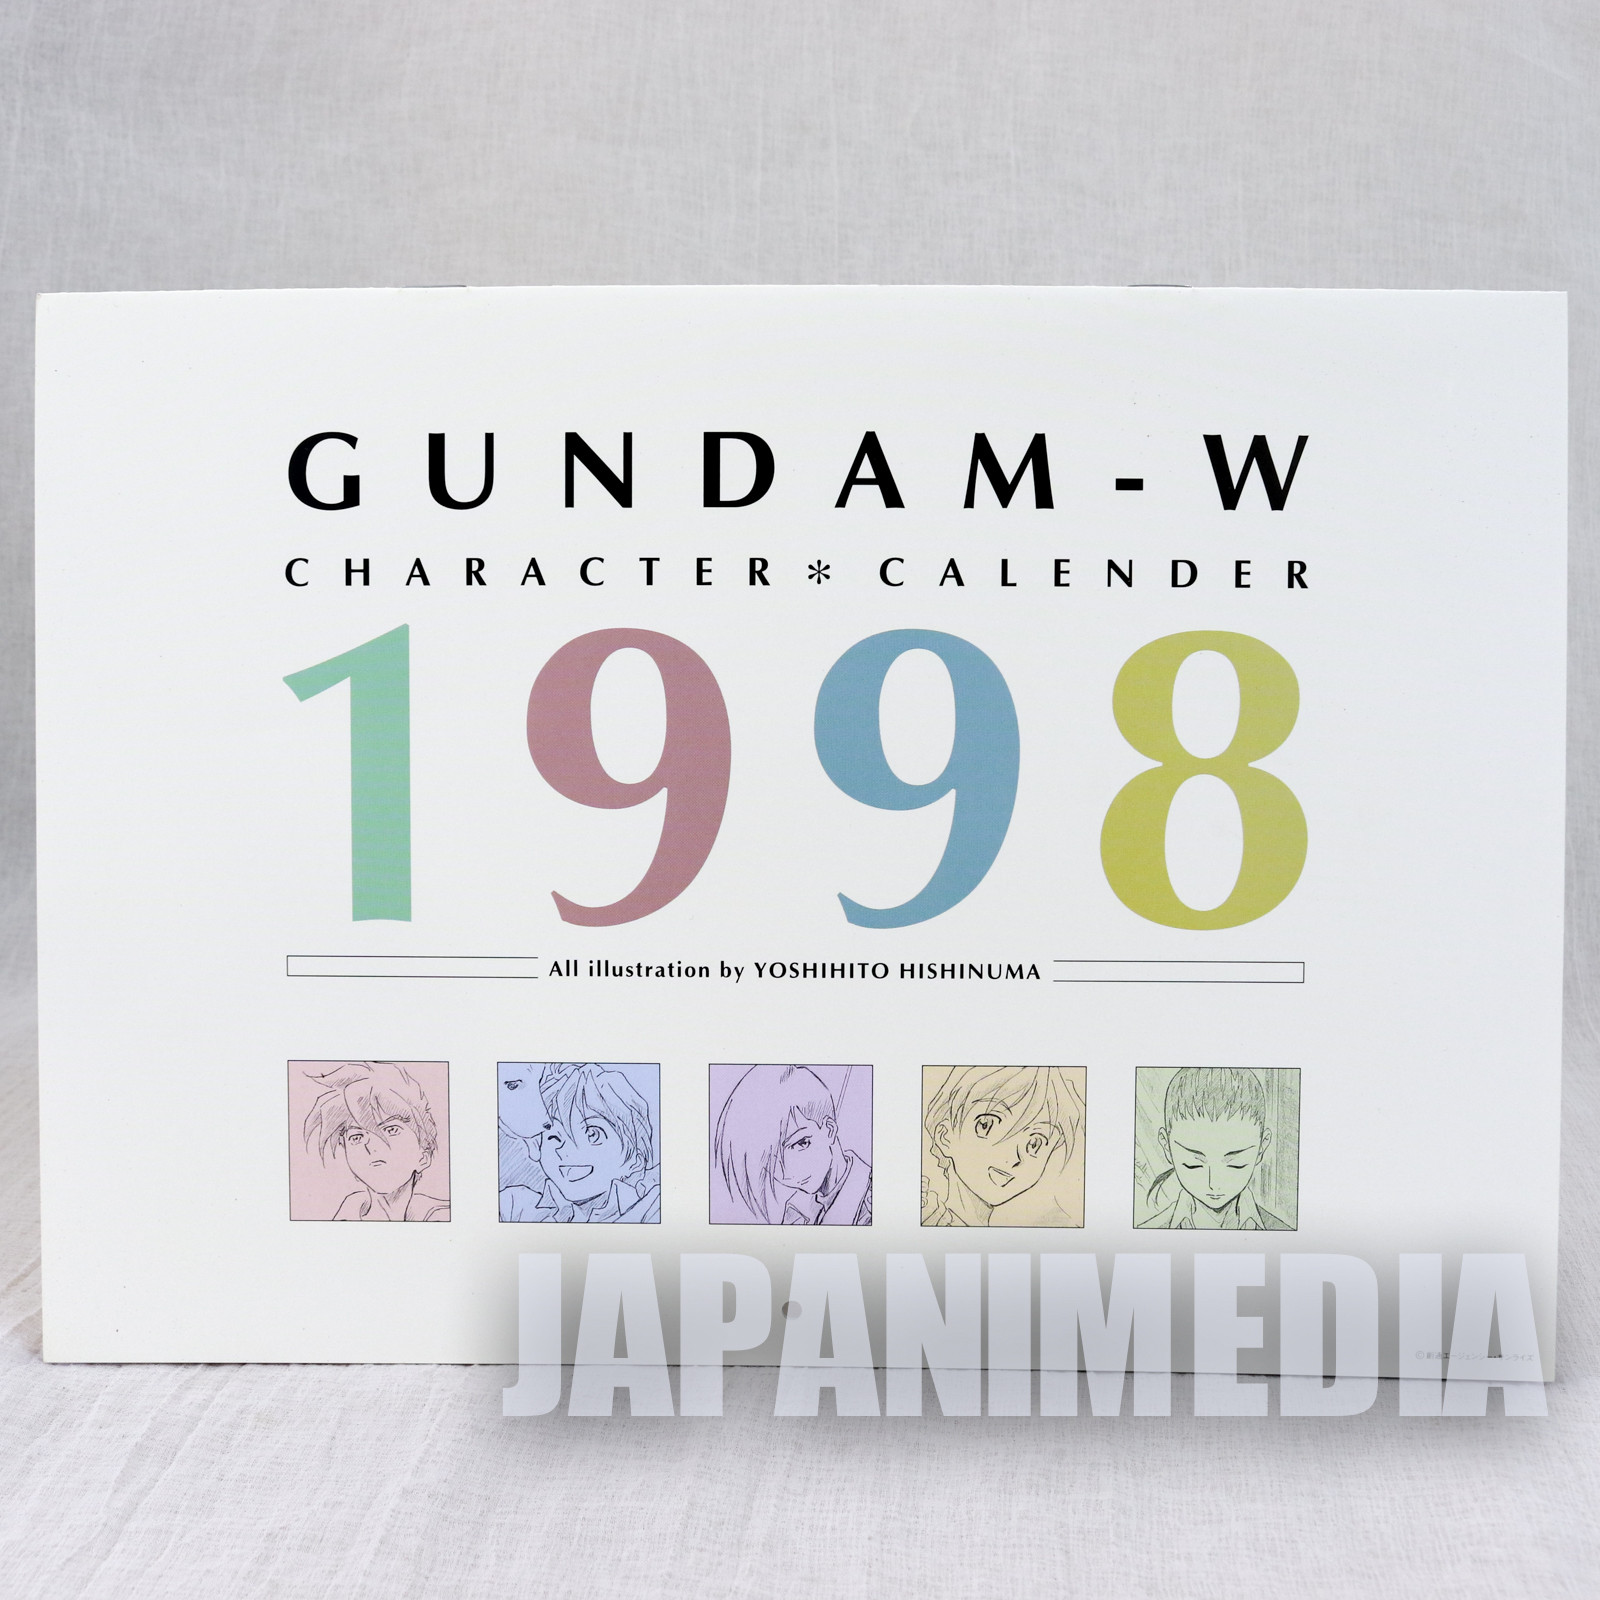 Gundam Wing Character Calender 1998 JAPAN